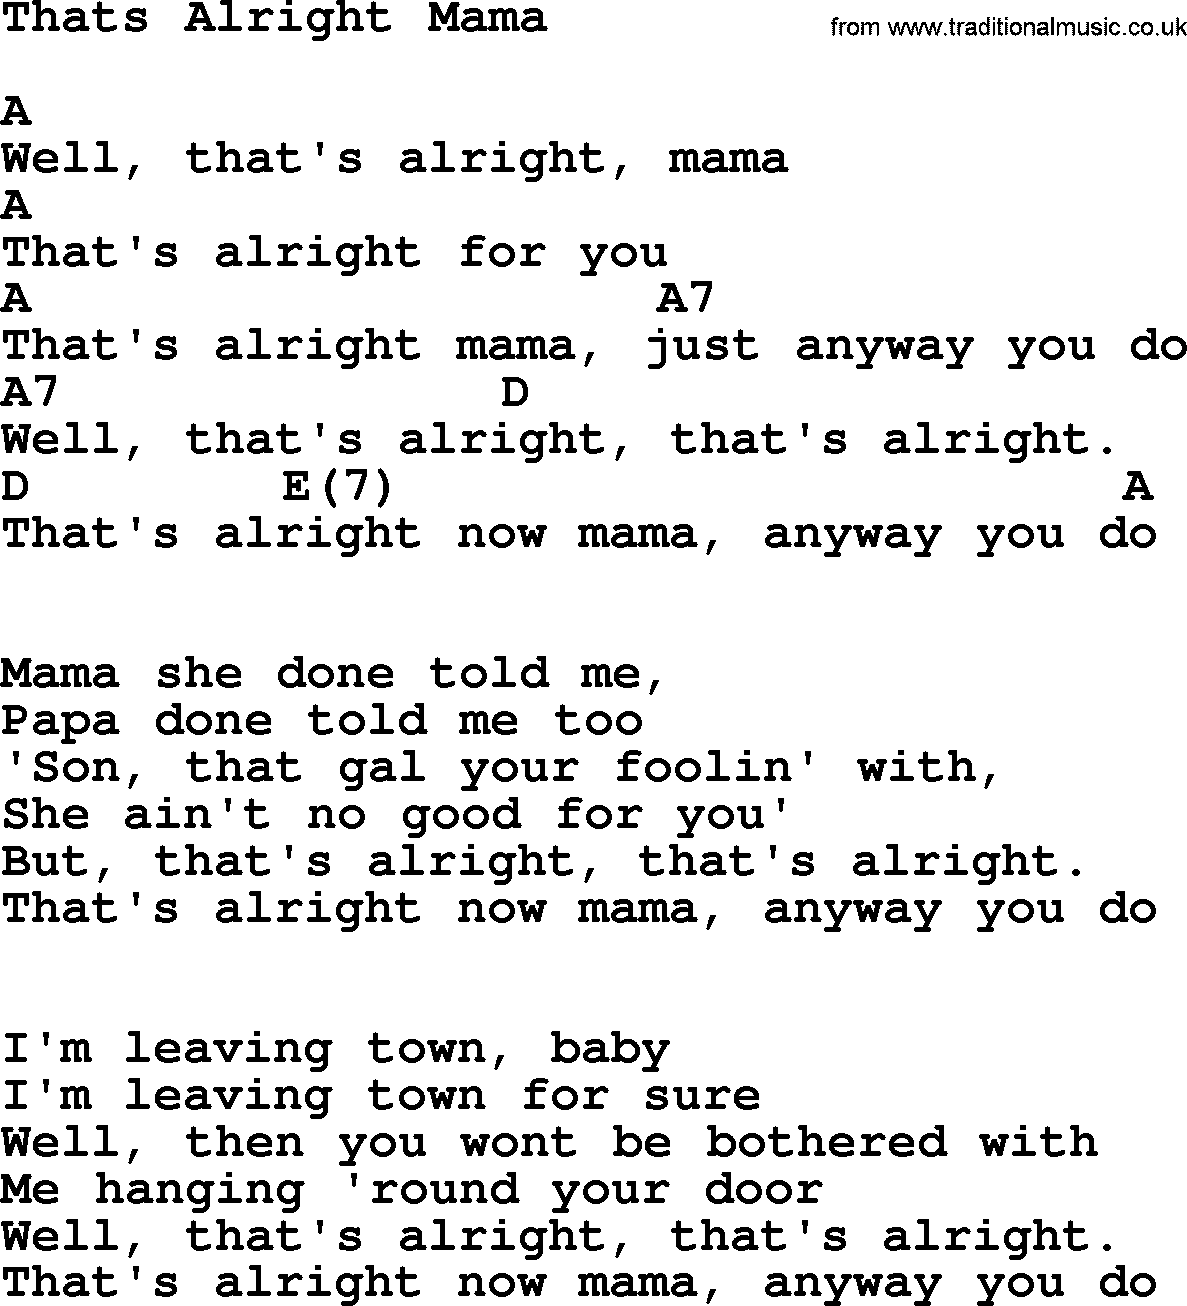 Elvis Presley song: Thats Alright Mama, lyrics and chords